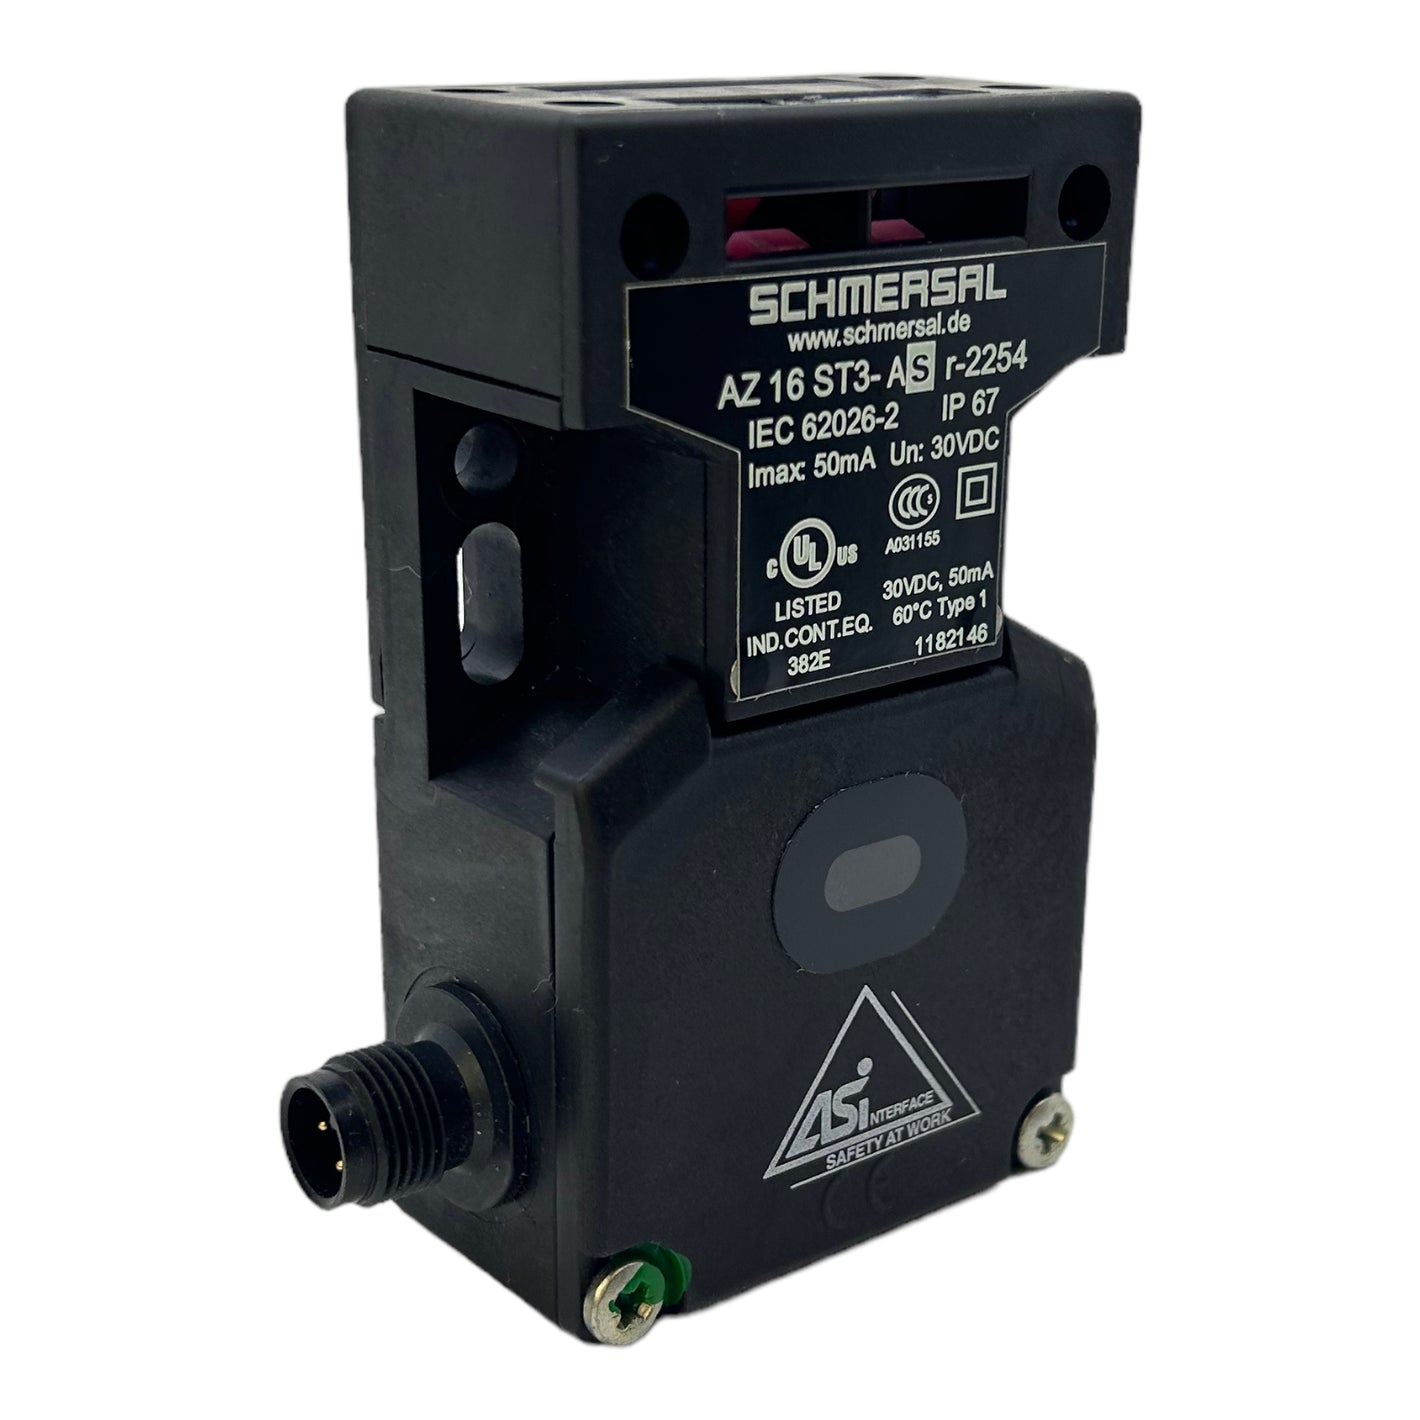 Schmersal AZ16ST3-AS safety lock safety switch Un:30V DC 4-pin 